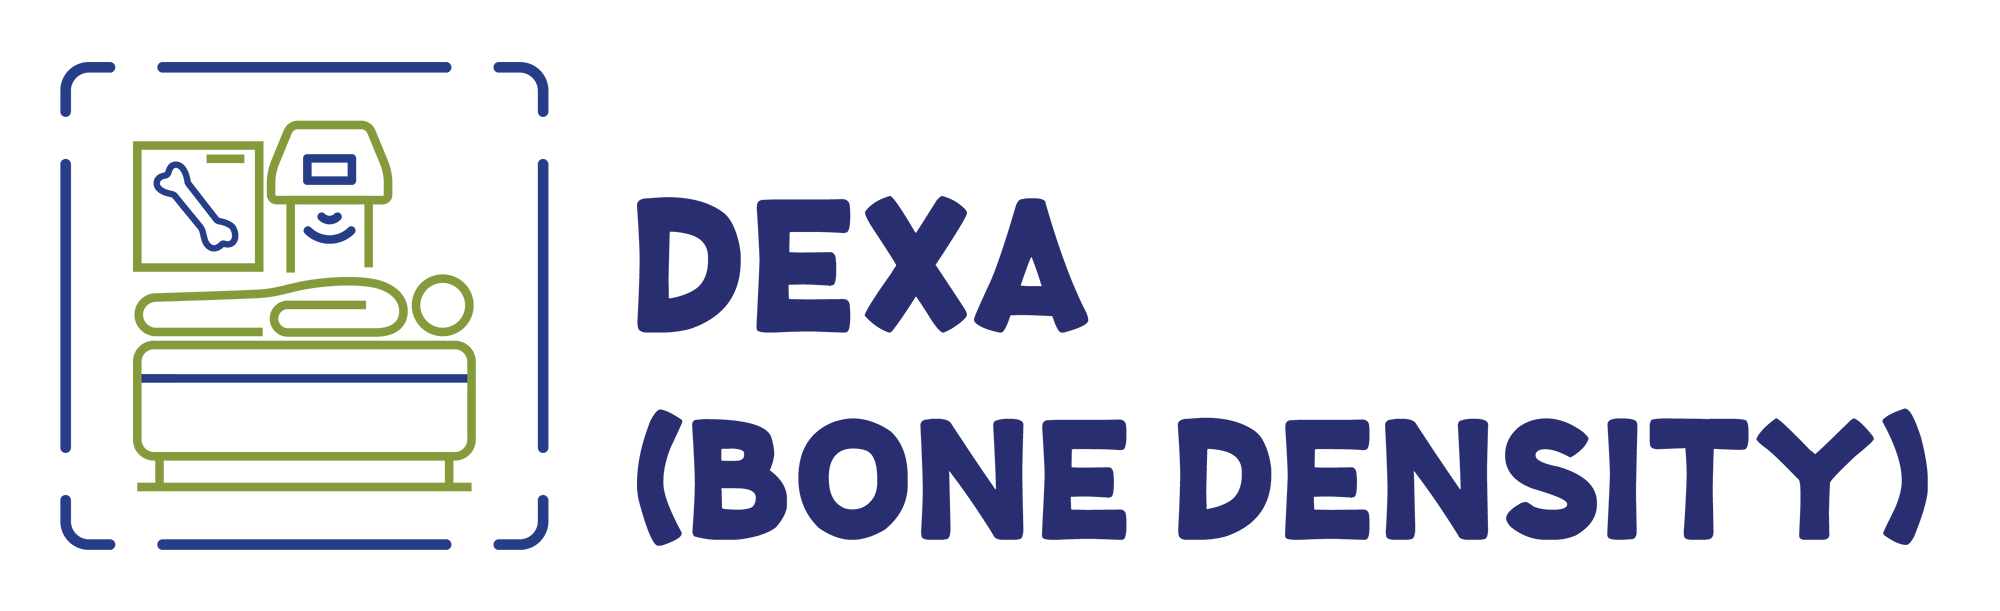 DEXA | Bone Densitometry, New Jersey Imaging Network